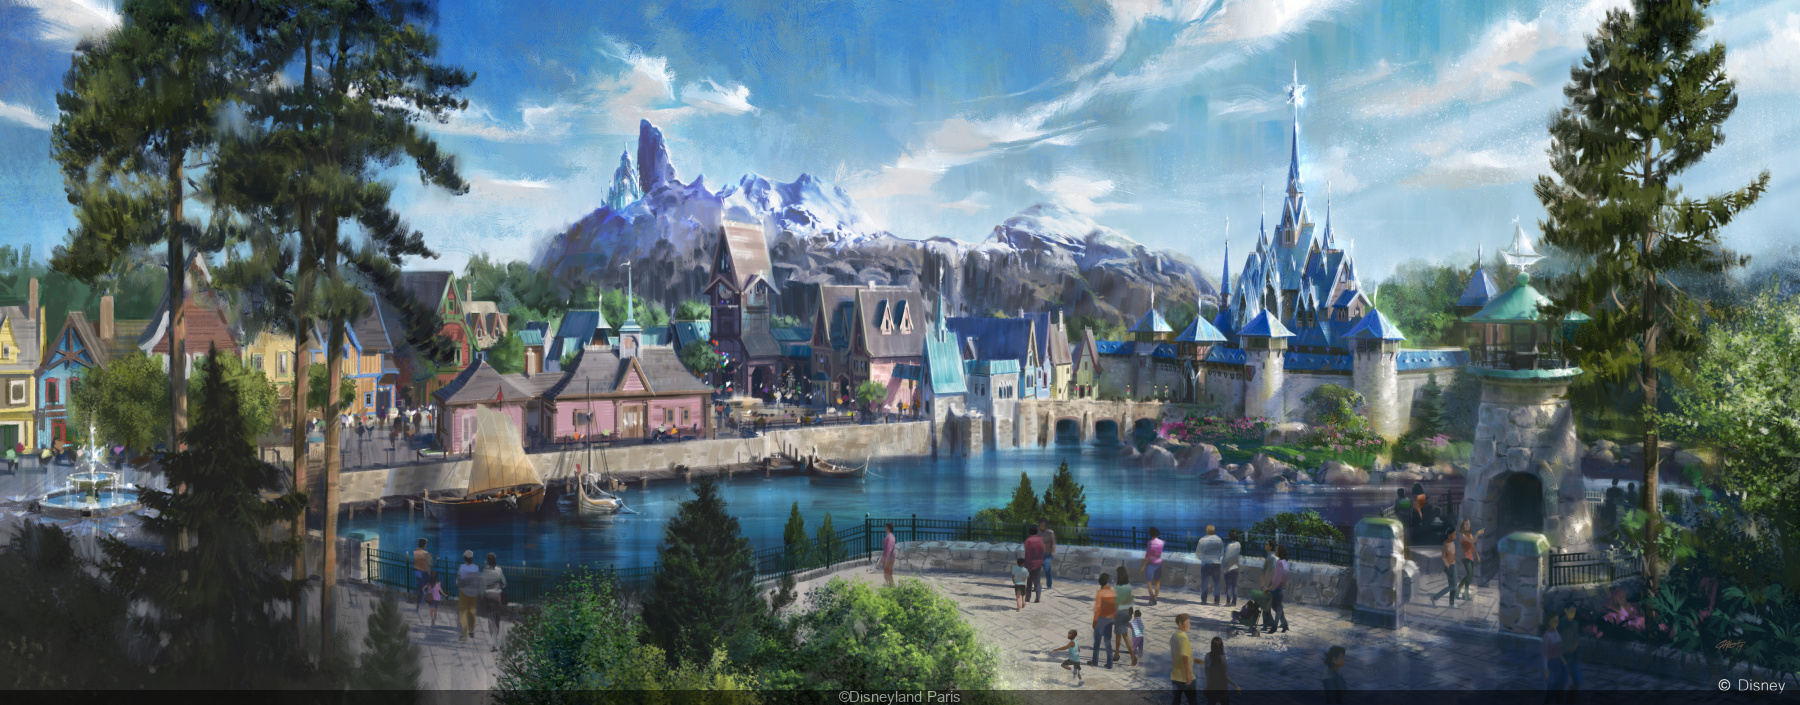 More Details On The New Frozen Area At Disneyland Paris Sortiraparis Com